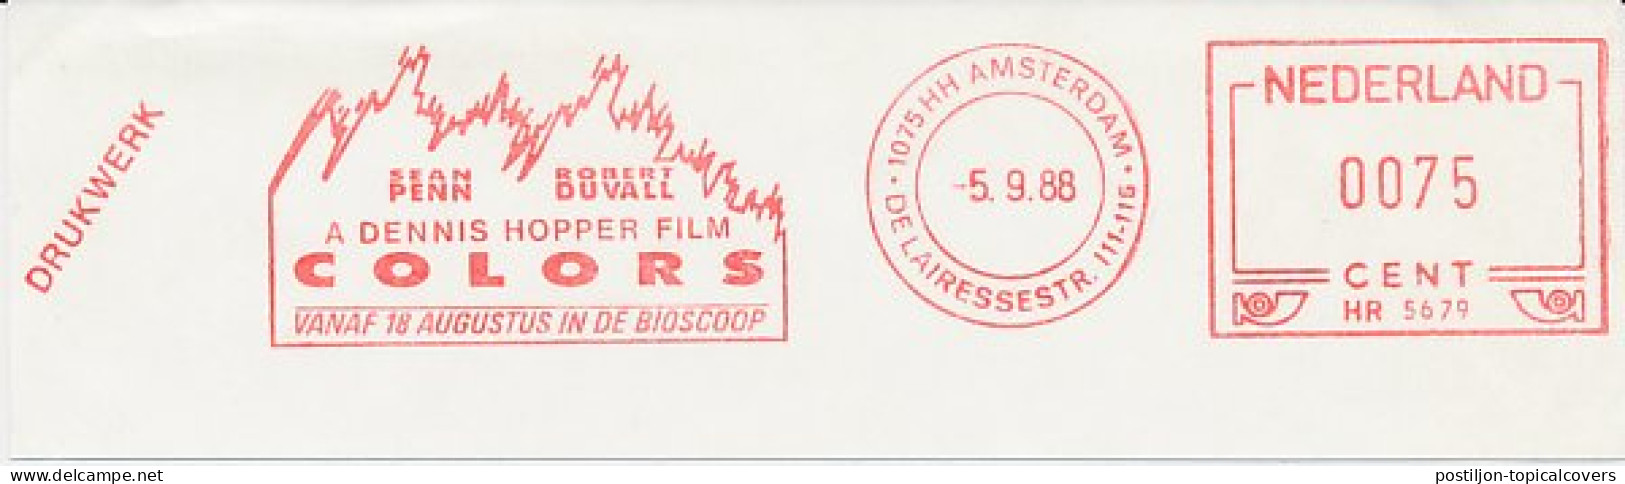 Meter Cut Netherlands 1988 Colors - Movie - Police - Cinema